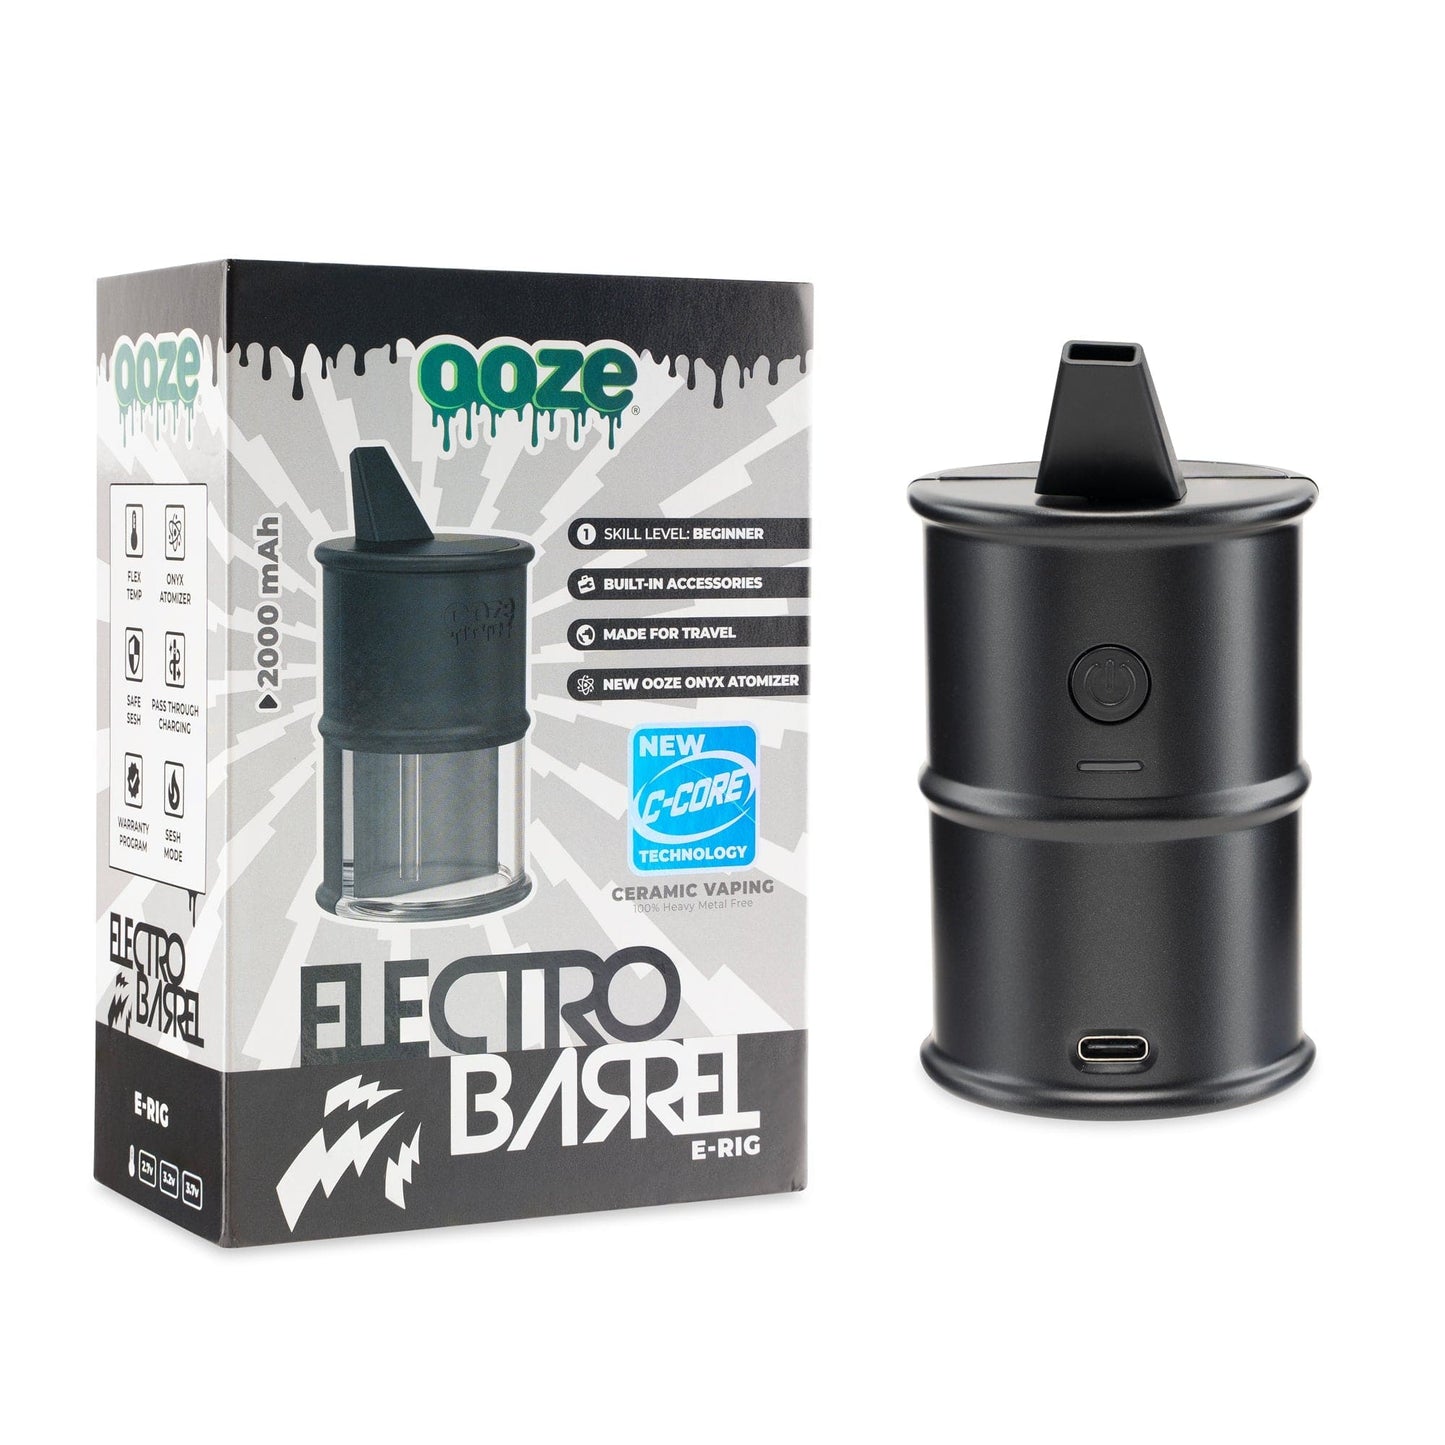 Ooze e-rig Panther Black Ooze Electro Barrel E-Rig – C-Core 2000 mAh